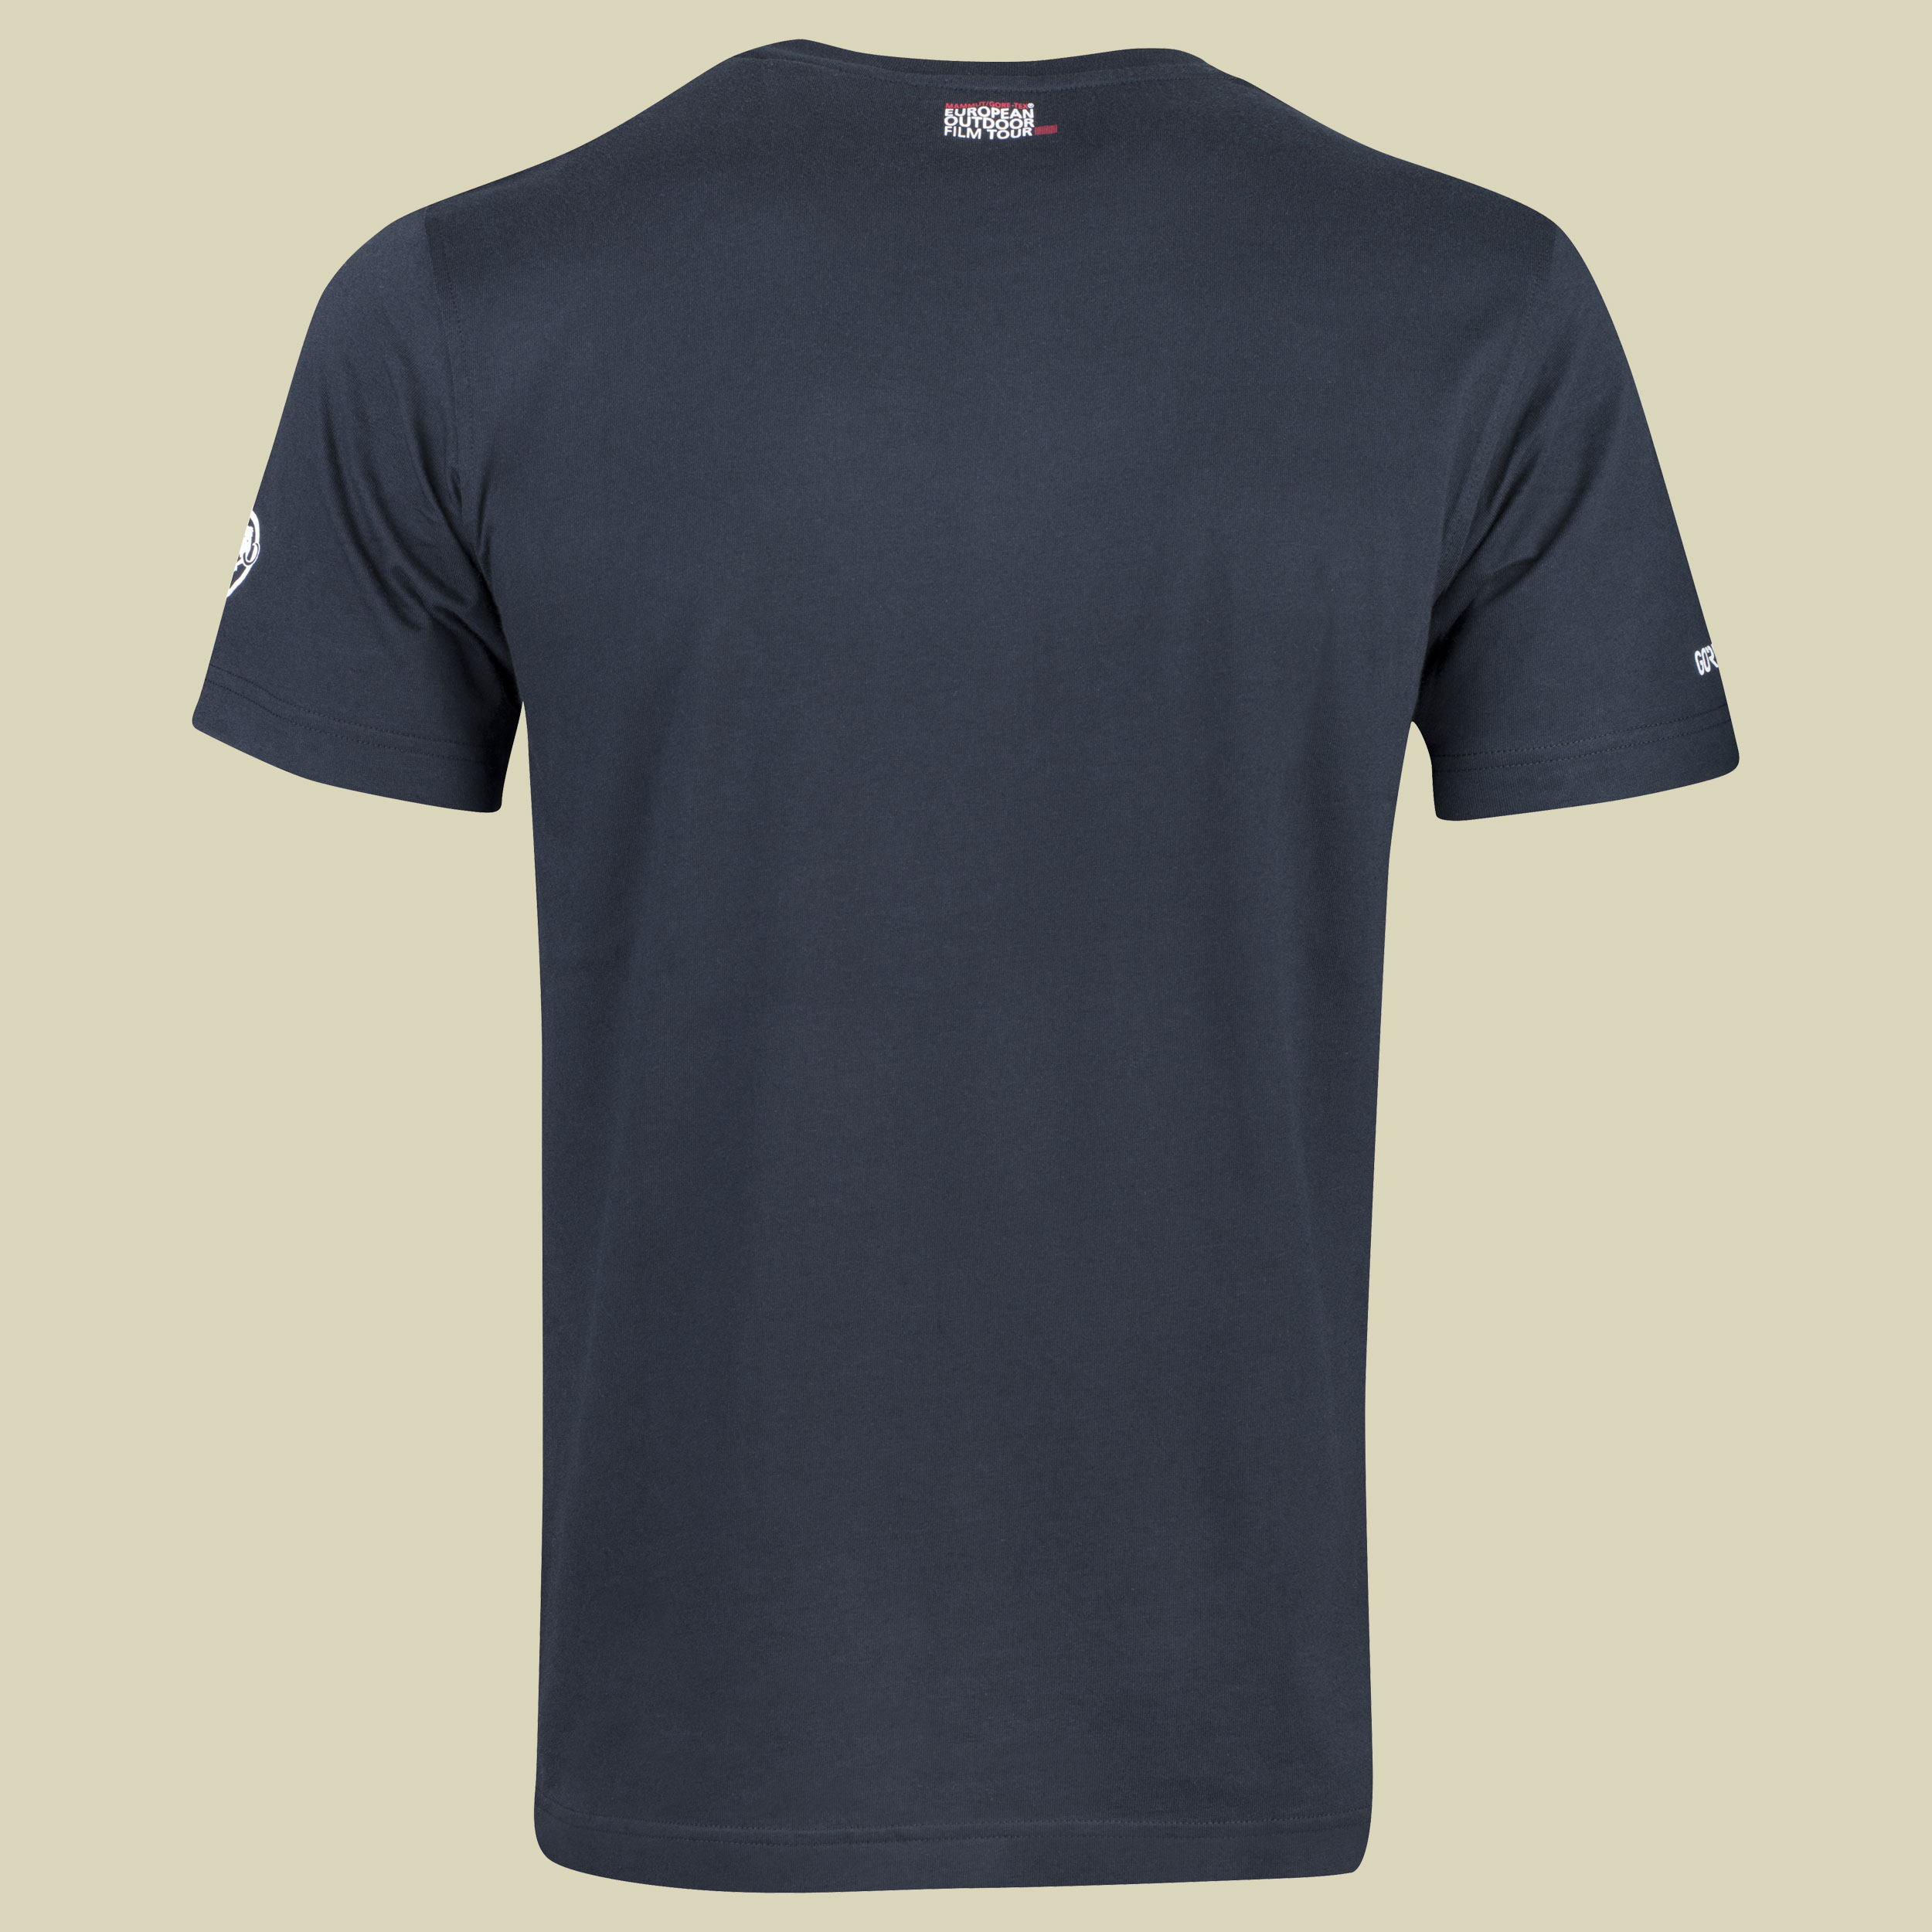 EOFT T-Shirt Men 2018/19 Größe S Farbe black